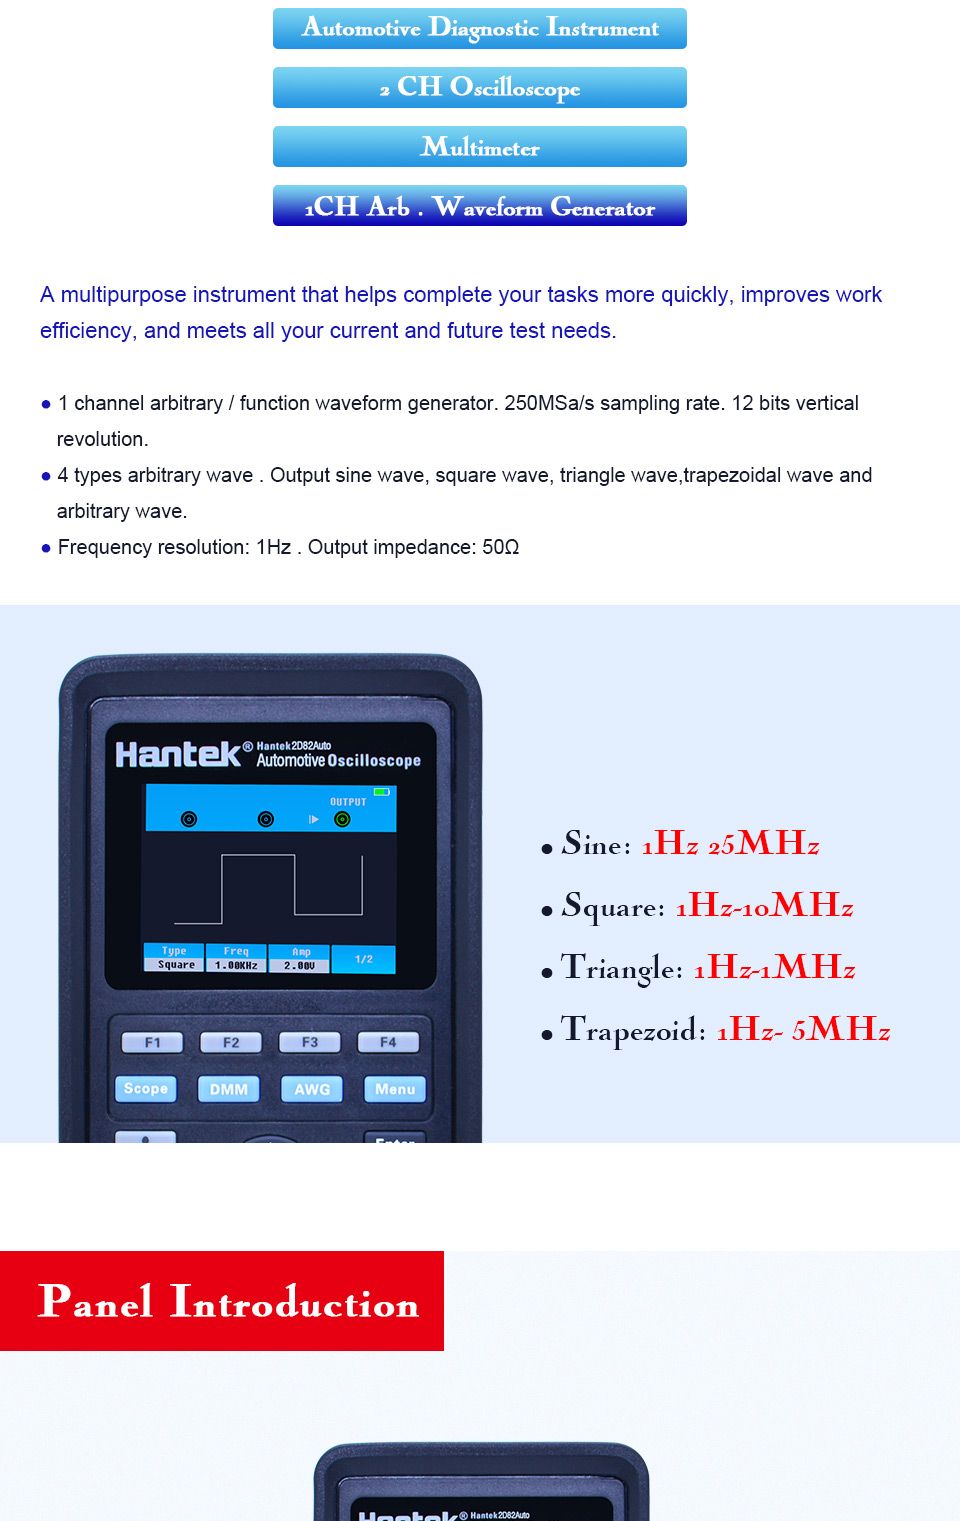 Hantek-2D82-AUTO-Digital-Oscilloscope-Multimeter-4-in1-2-Channels-80MHz-Signal-Source-Automotive-Dia-1721797